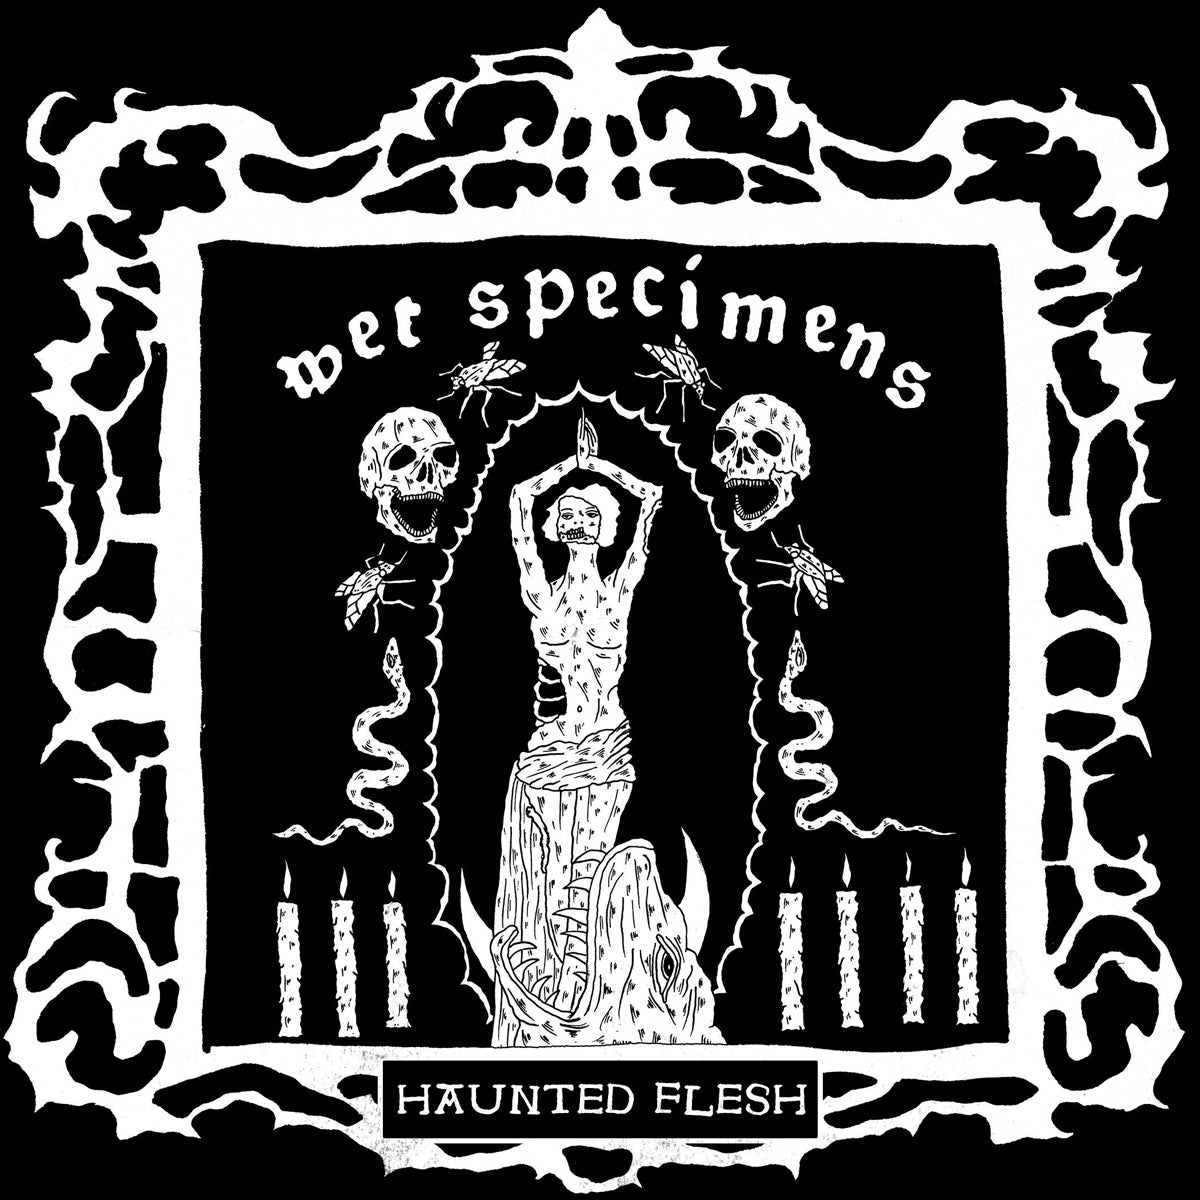 Wet Specimens- Haunted Flesh 7" ~THE EXECUTE!